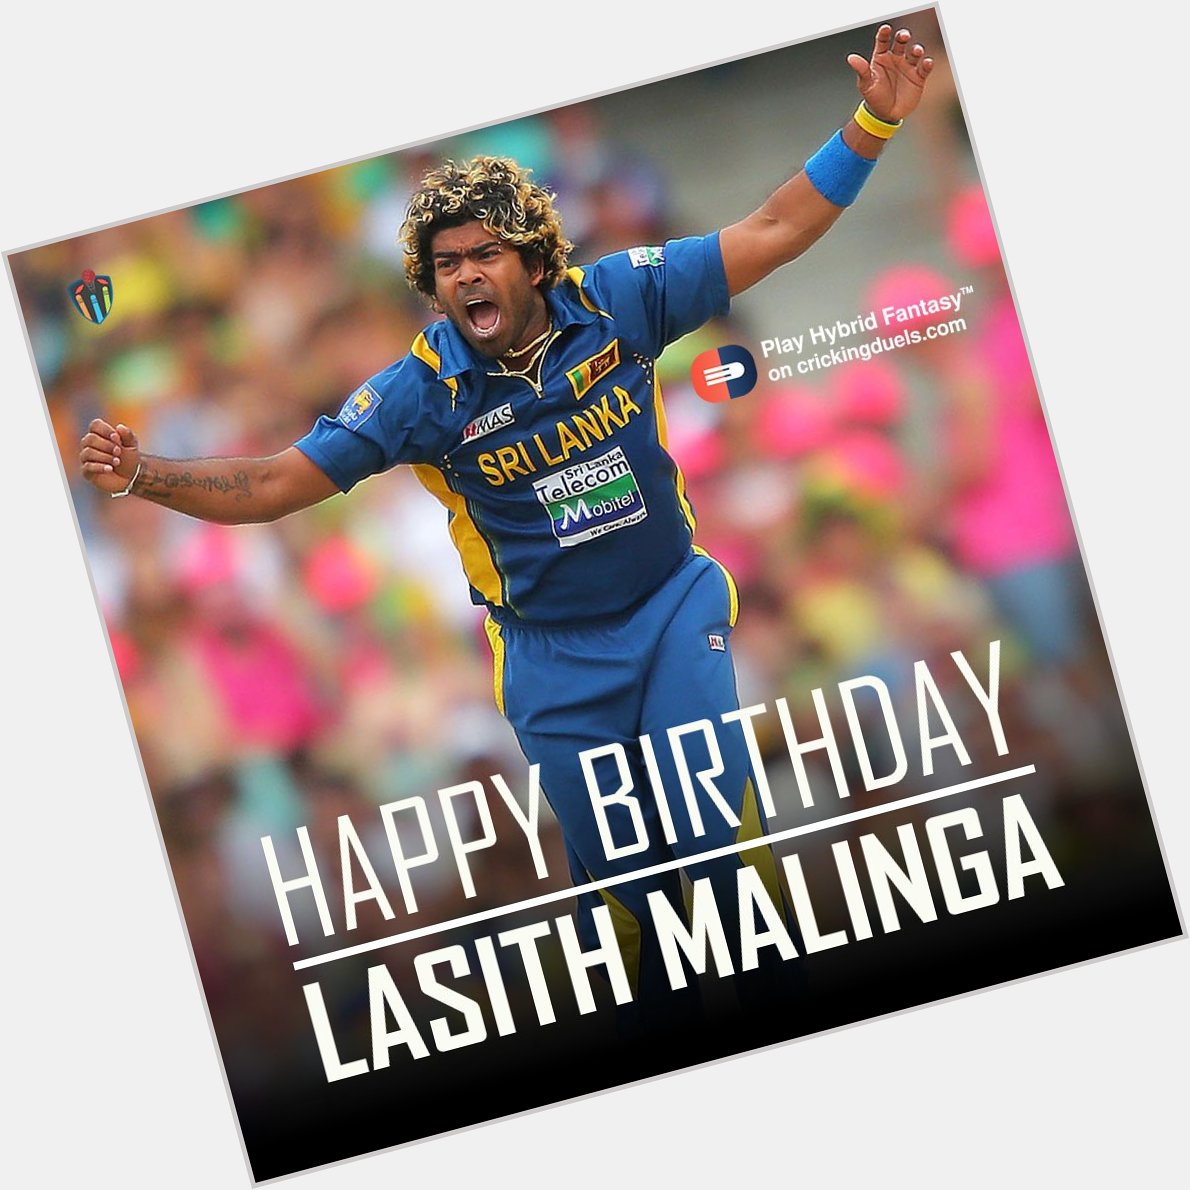 Happy Birthday, Lasith Malinga. The Sri Lankan cricketer turns 34 today. 